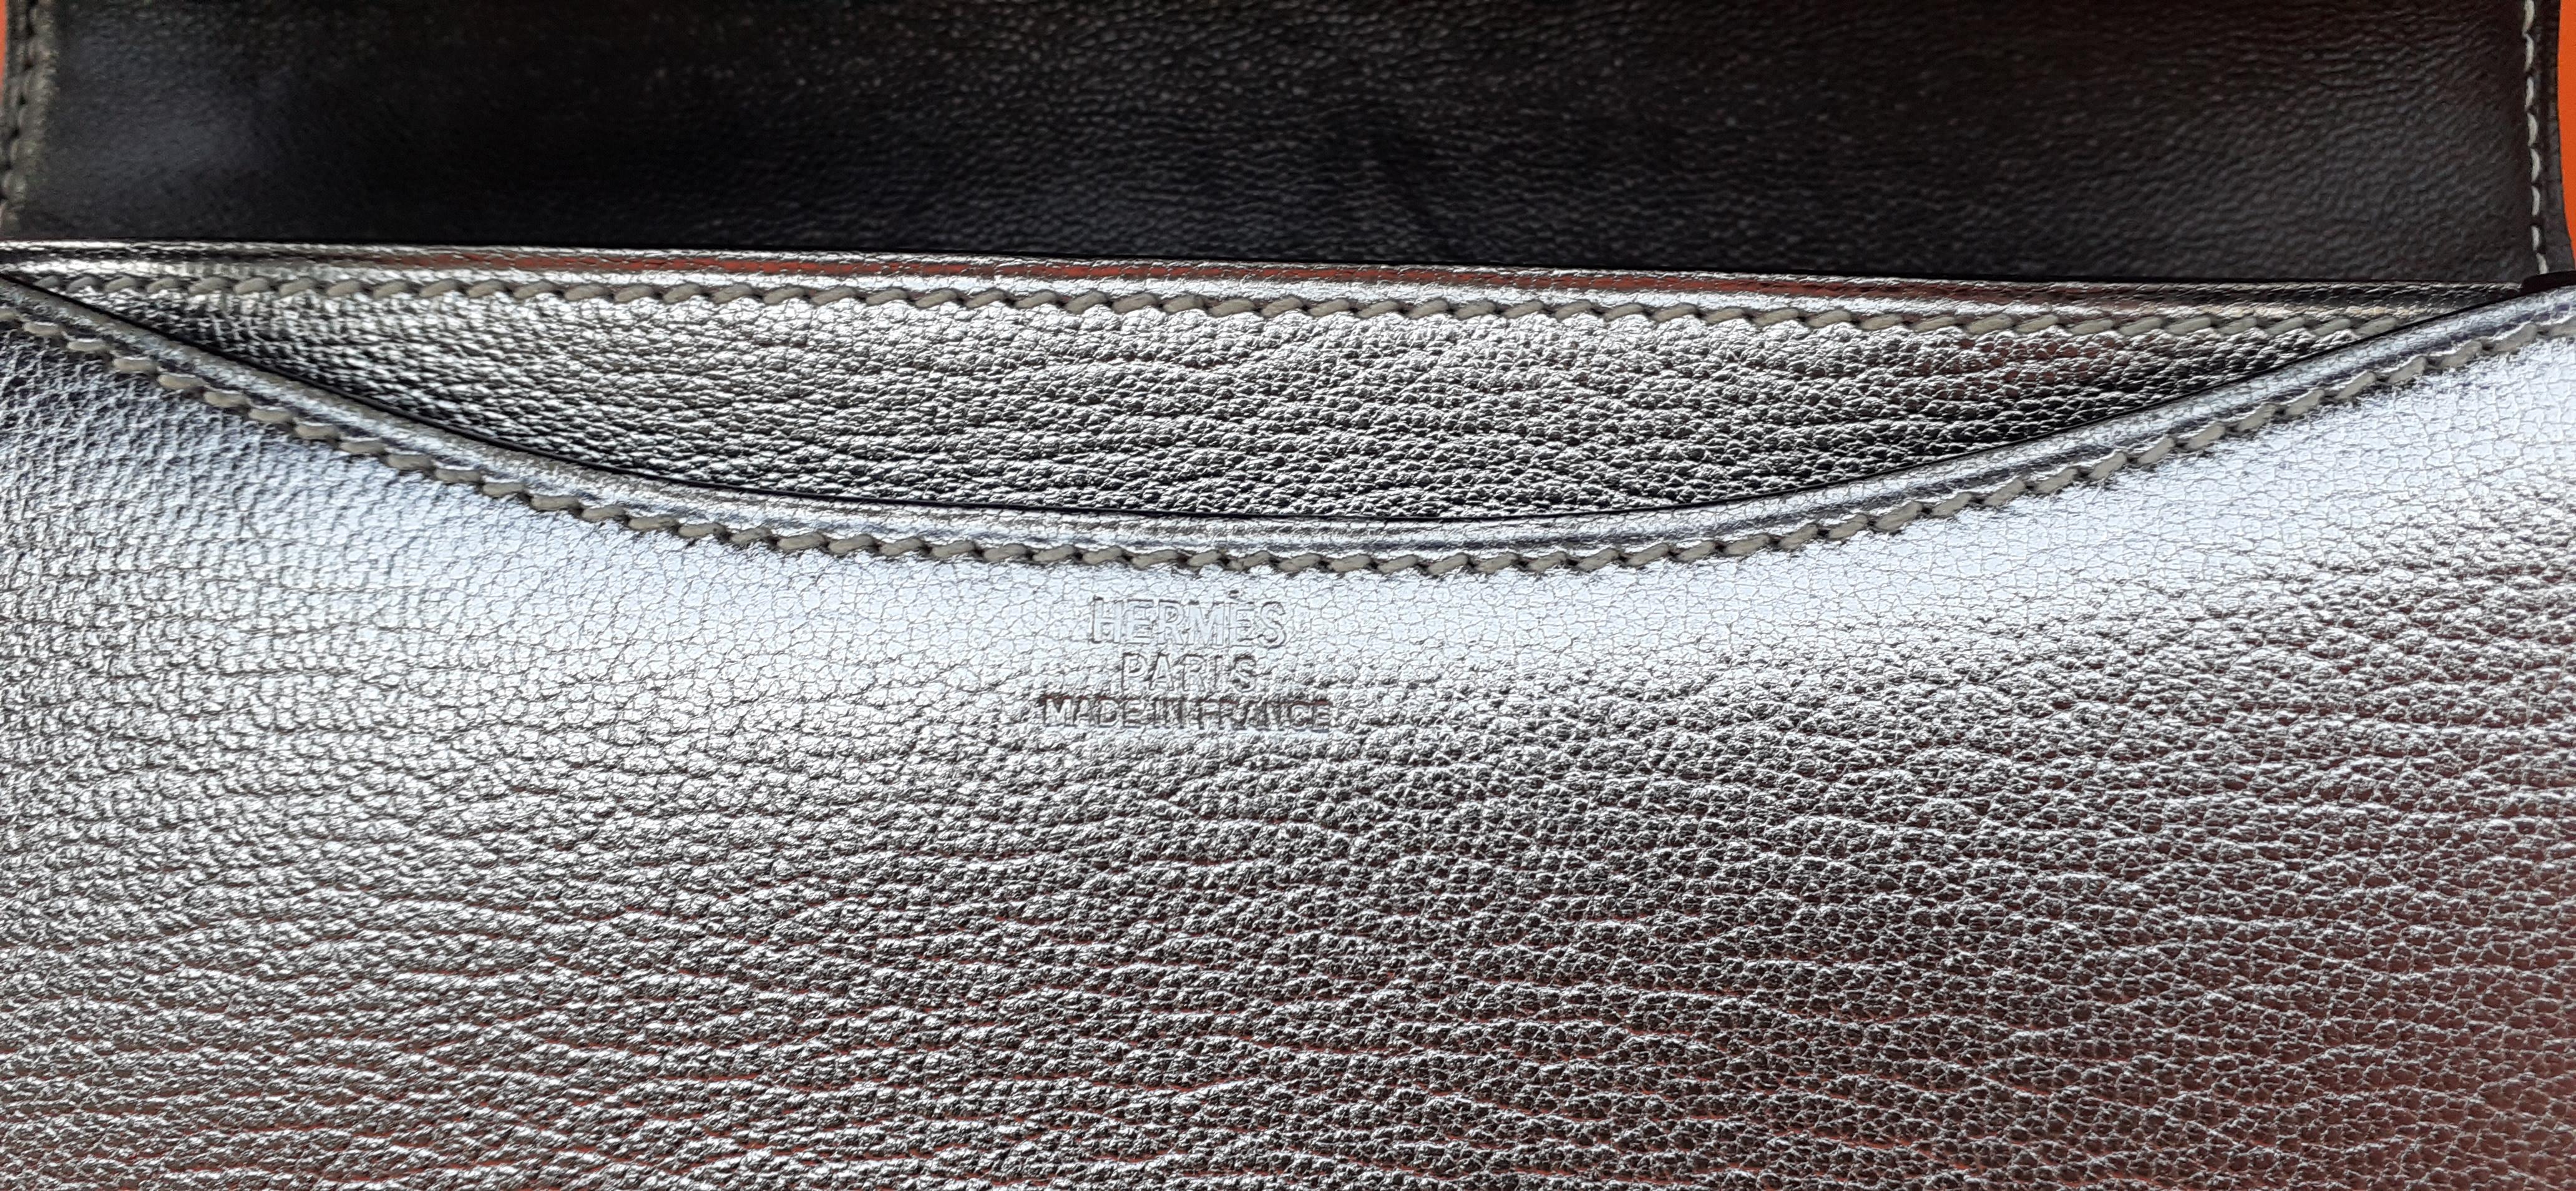 Exceptional Hermès Mini Constance Metallic Silver Chevre Leather Phw 18 cm  For Sale 7